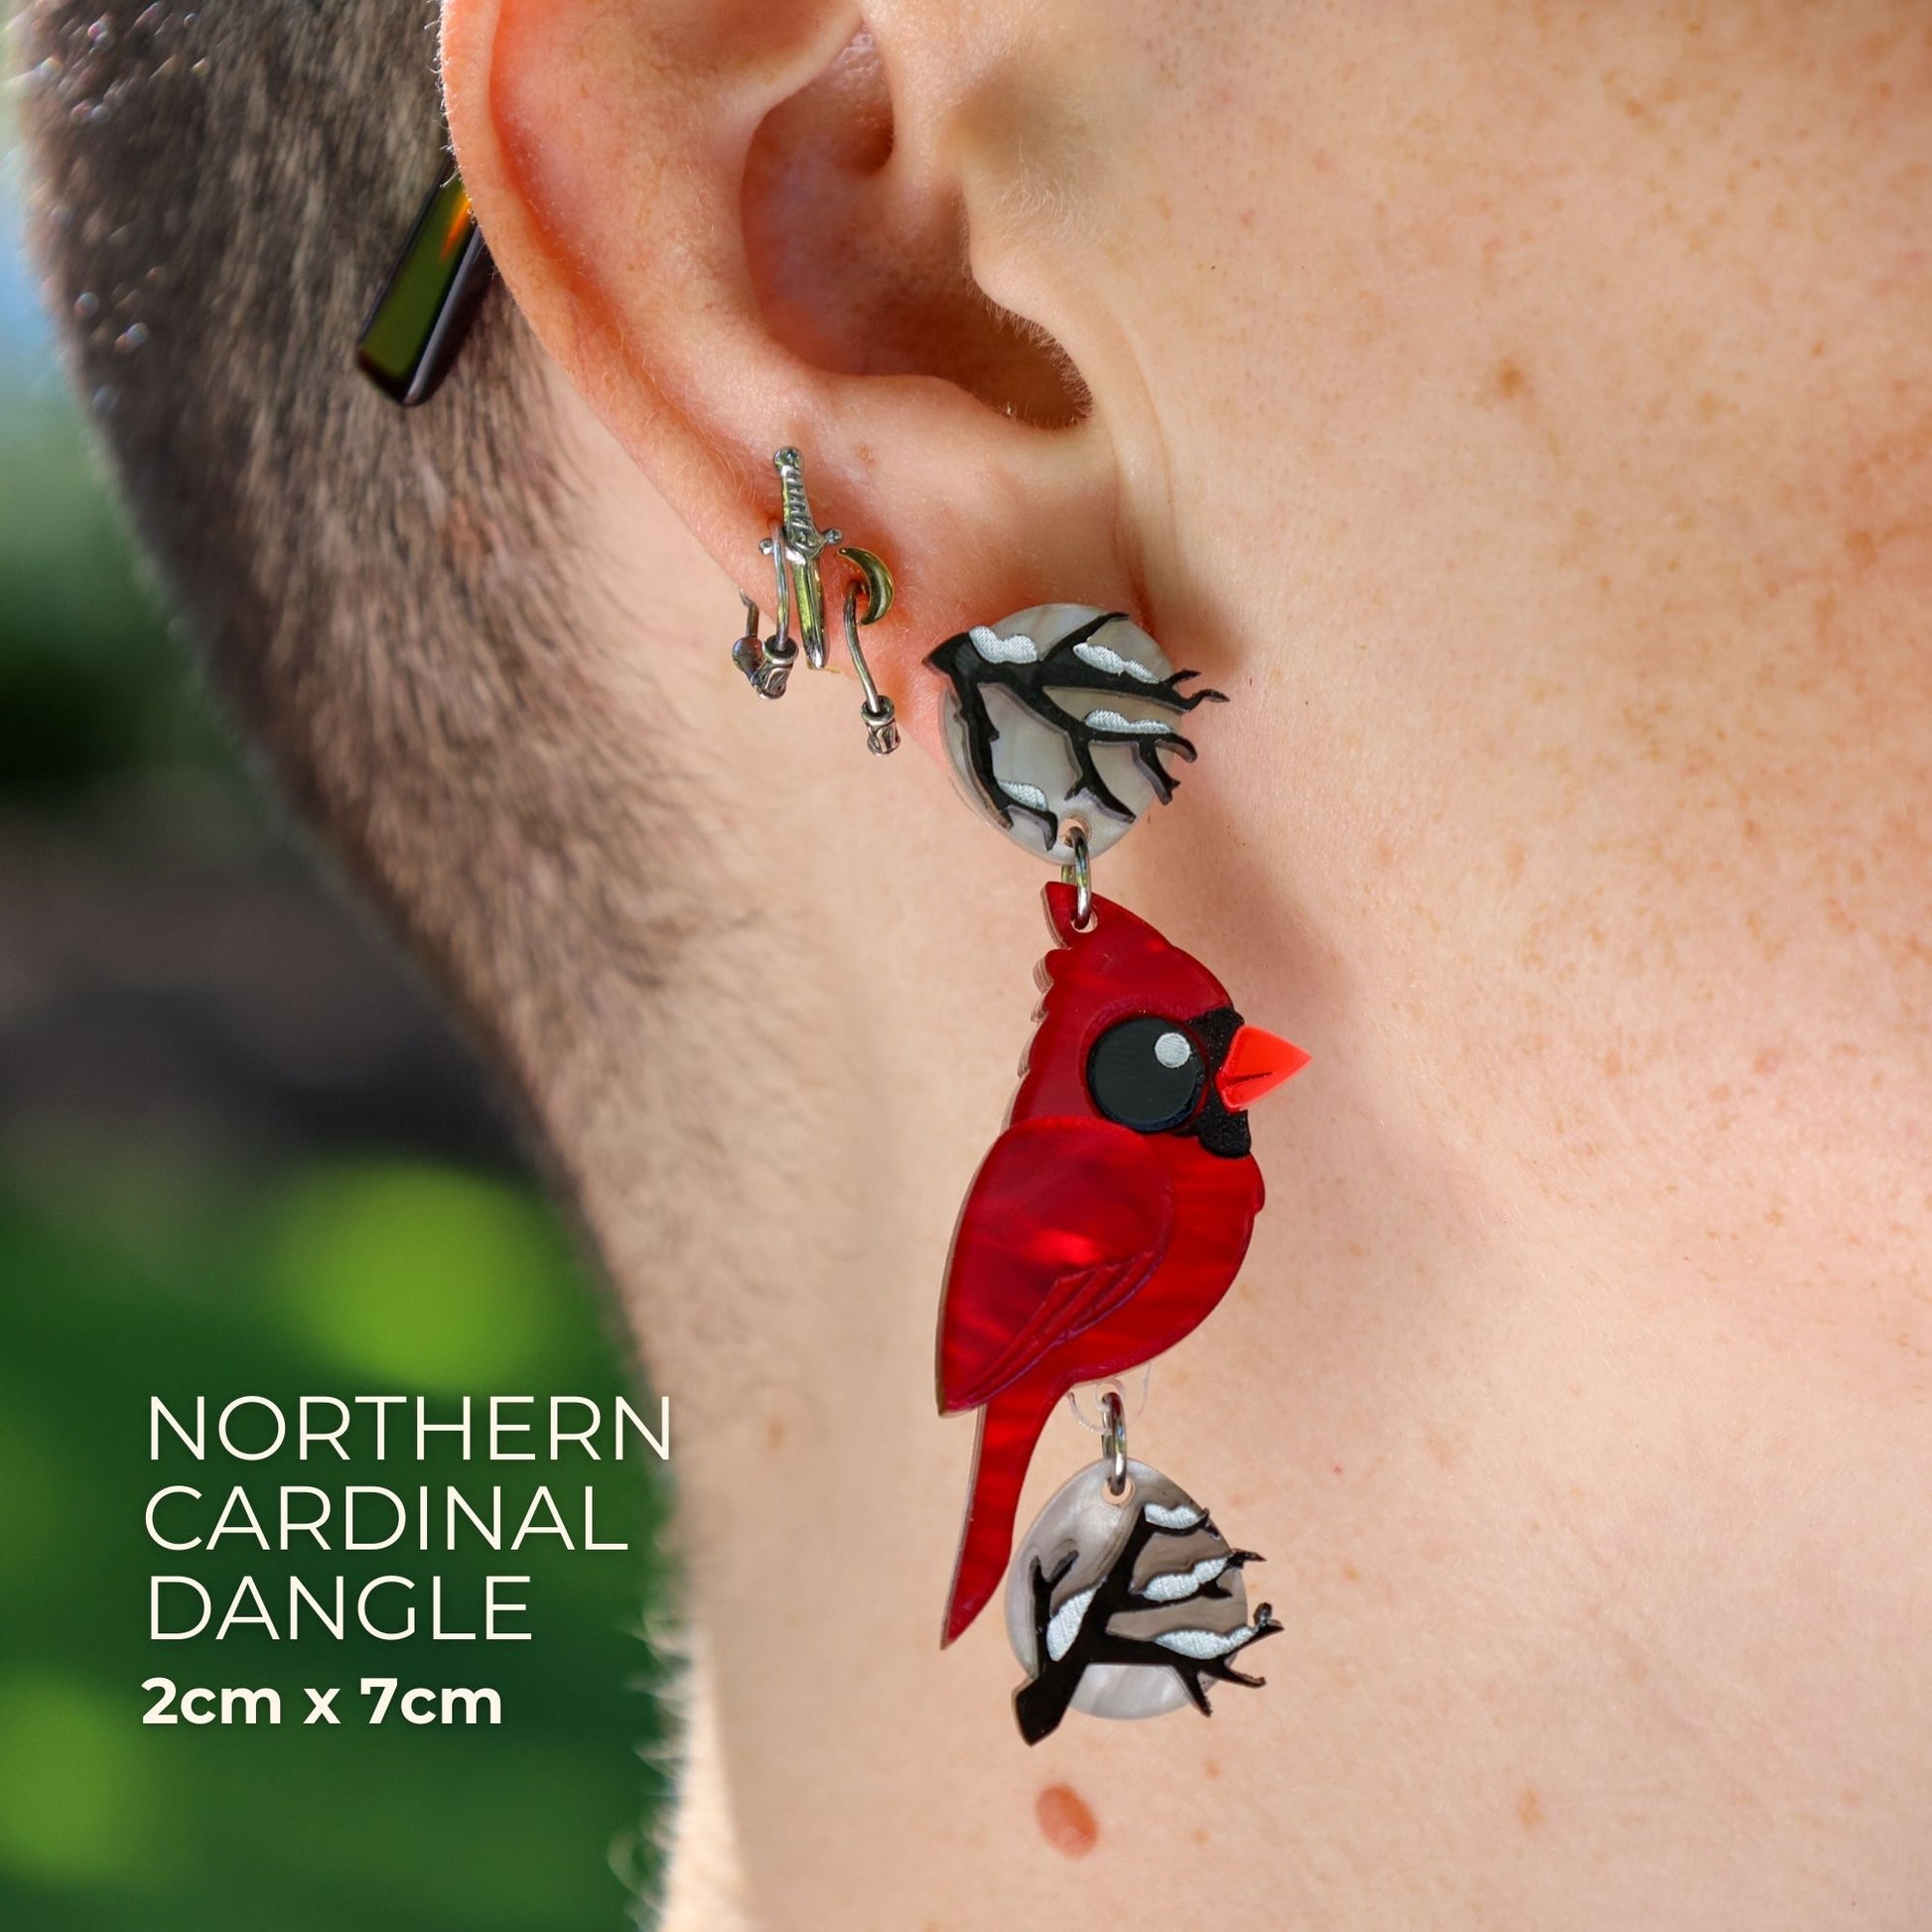 Northern Cardinal Dangles